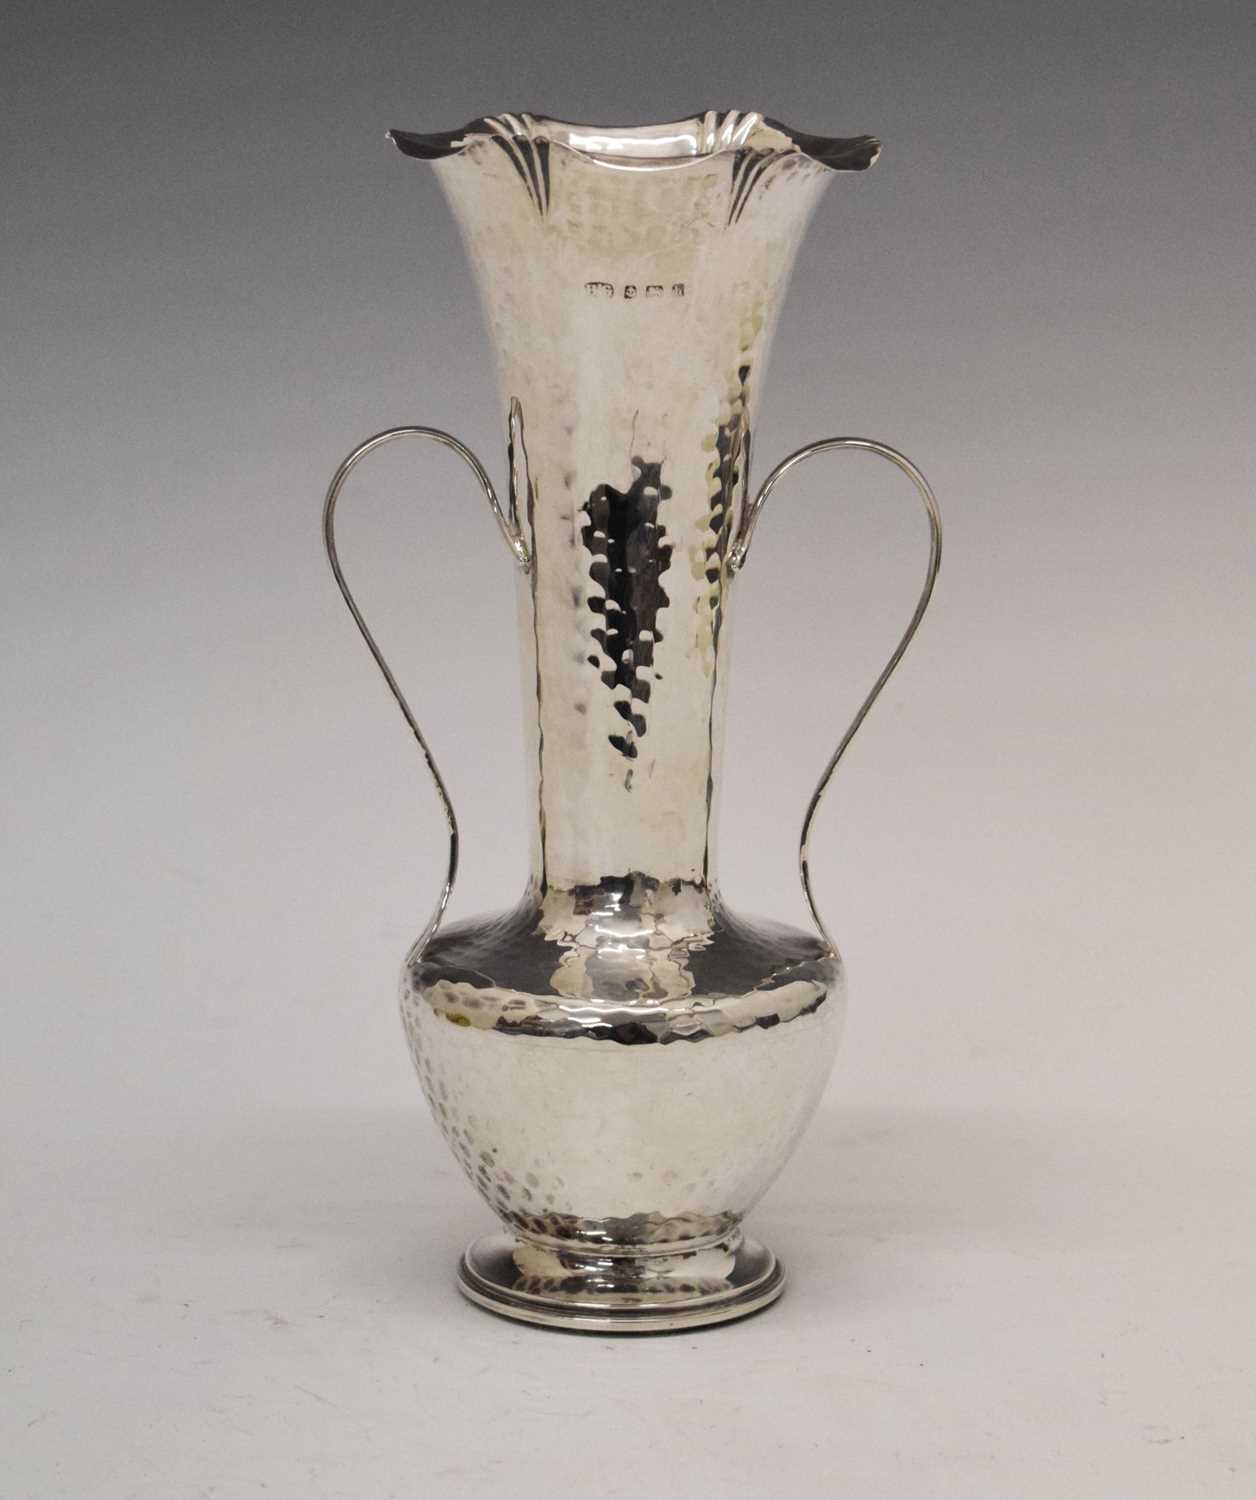 Lot 91 - Edwardian Art Nouveau silver two-handed vase